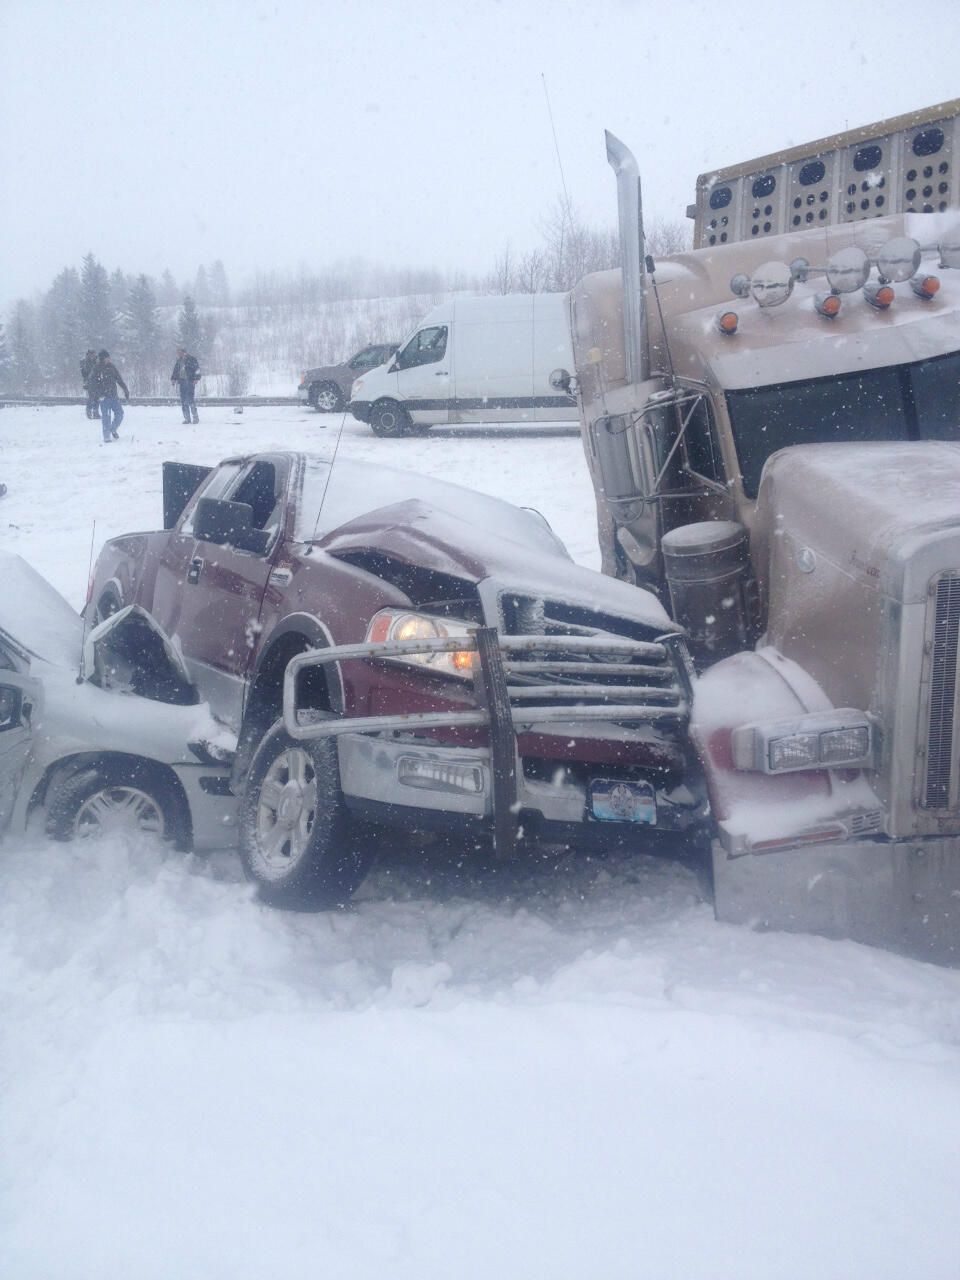 Alberta man tells story of frightening pileup on Highway 2 during snow storm. 